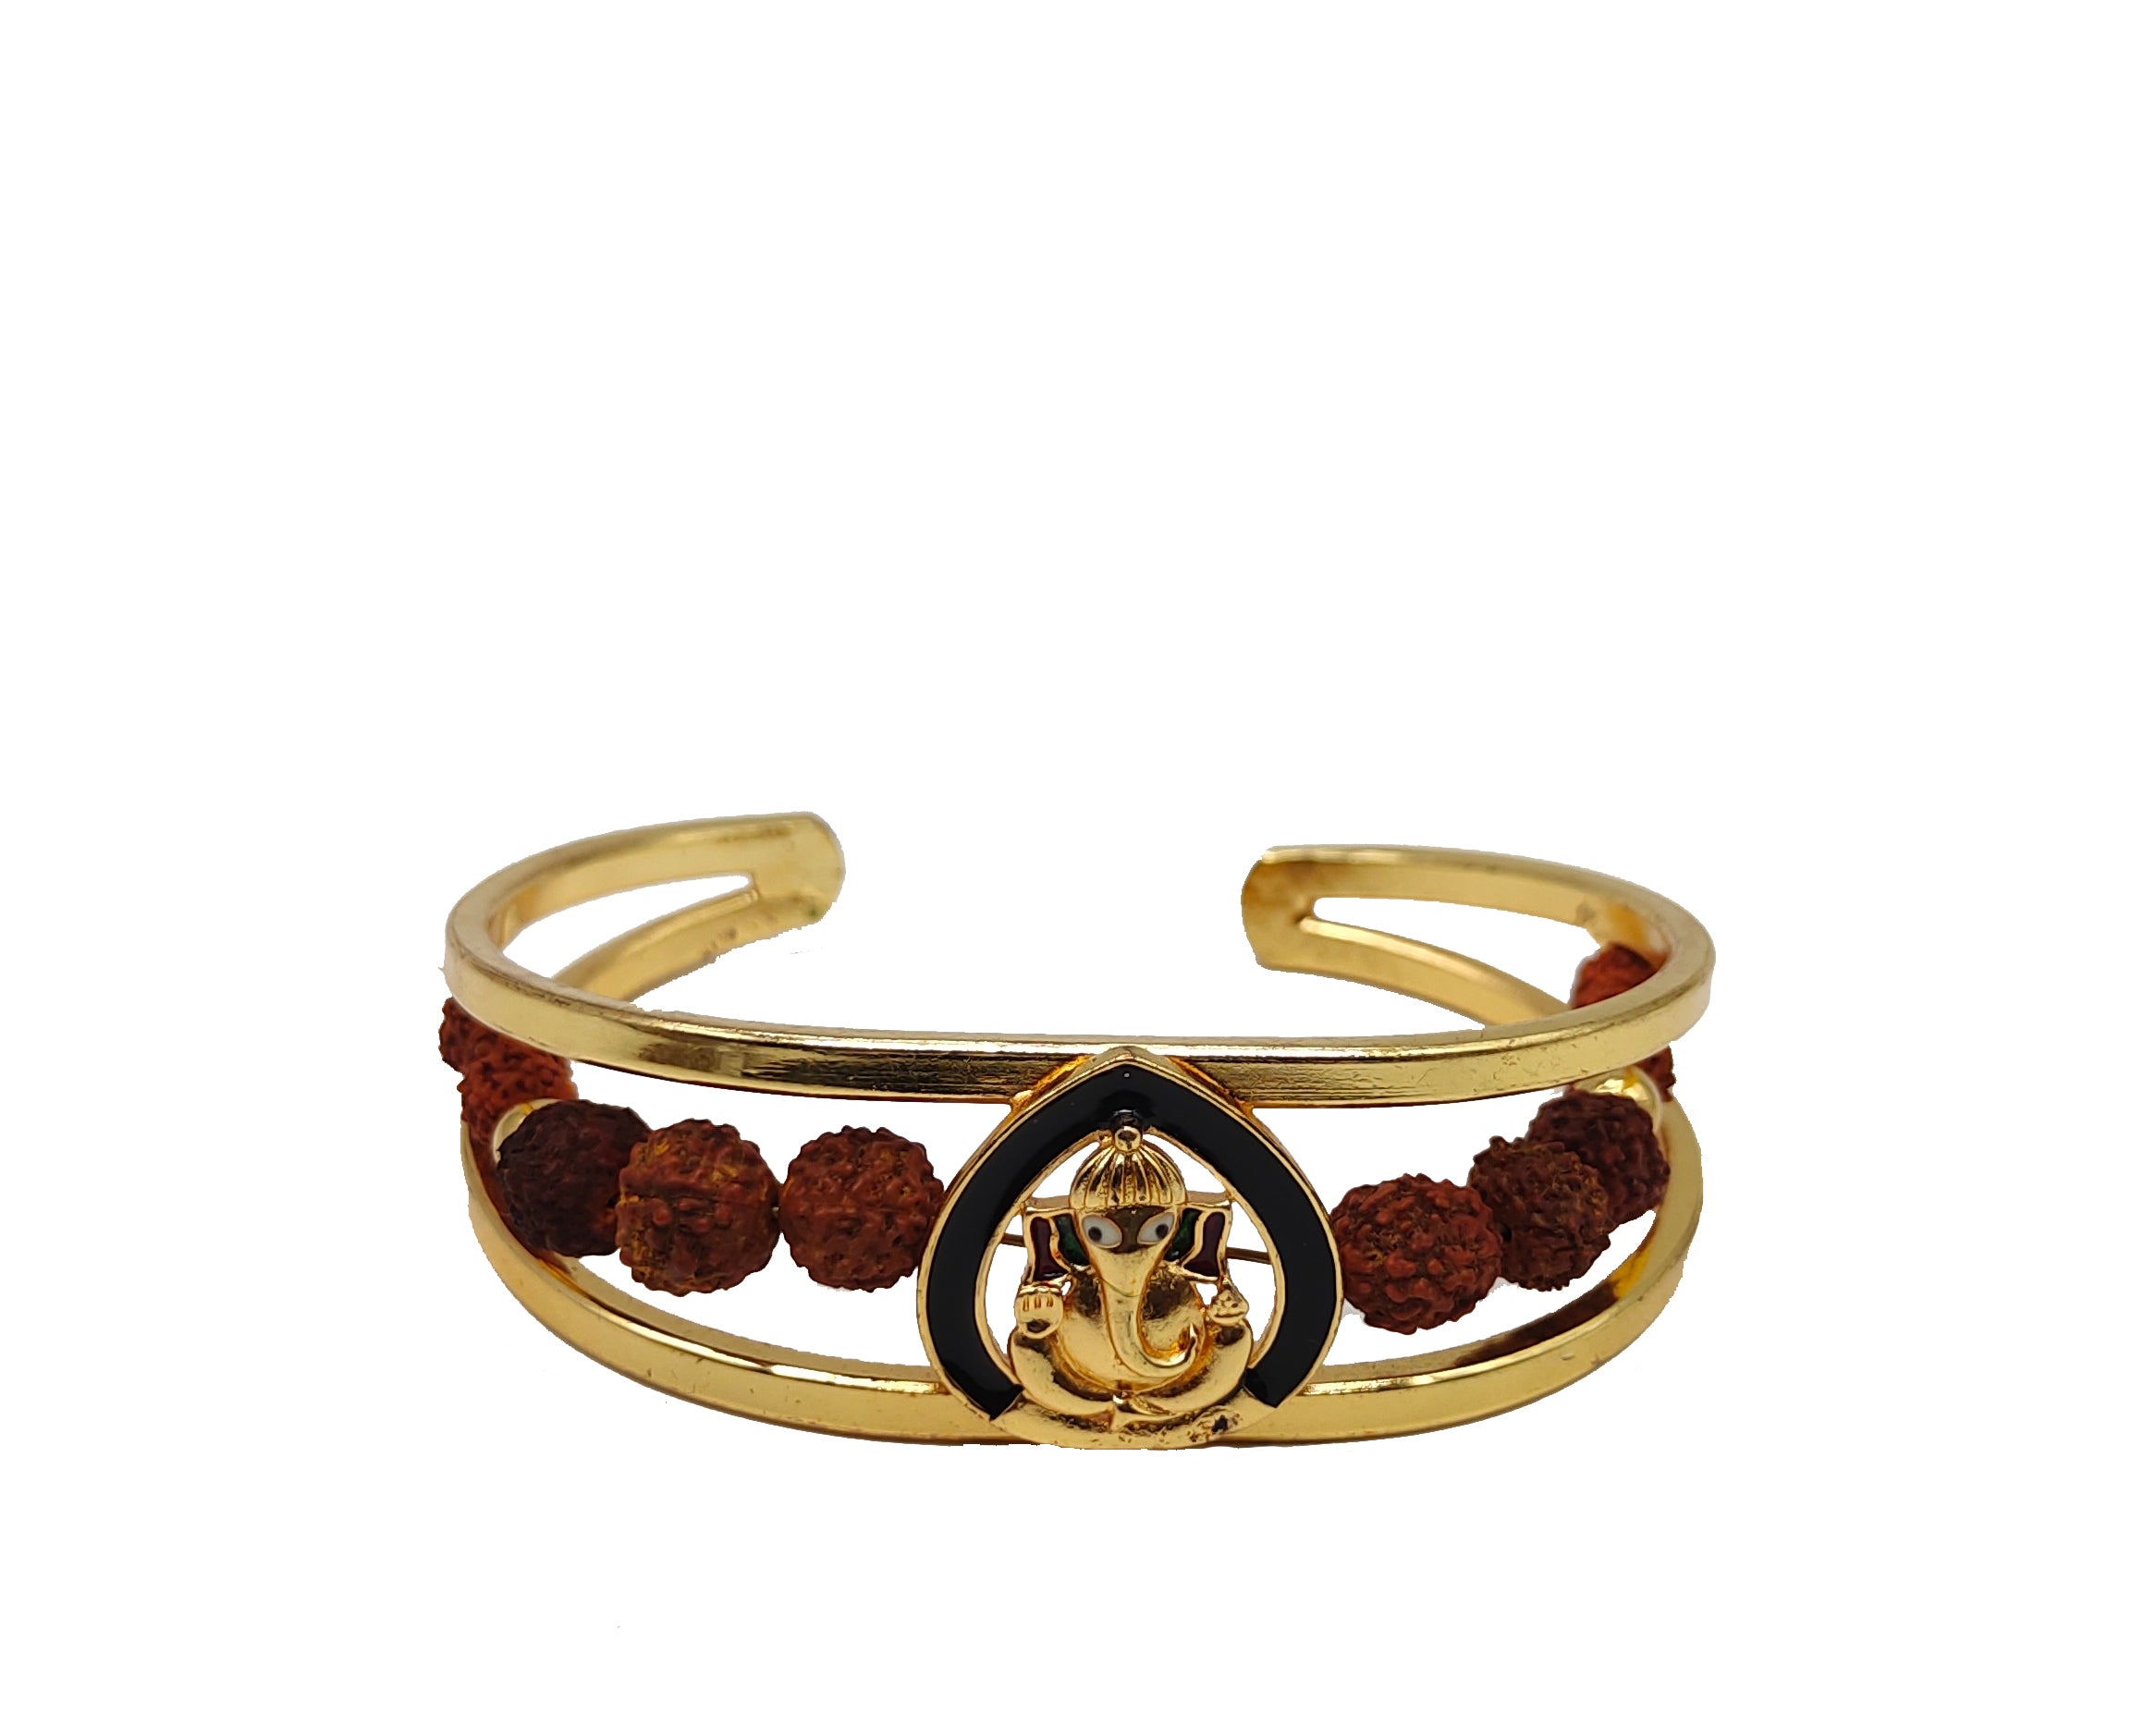 Genuine 22k Yellow Gold Handmade Top Class Natural Rudraksha Beads Bracelet  With Fabulous Tiger Design Men's Jewelry - Etsy | Man gold bracelet design,  Rudraksha jewelry, Mens gold bracelets